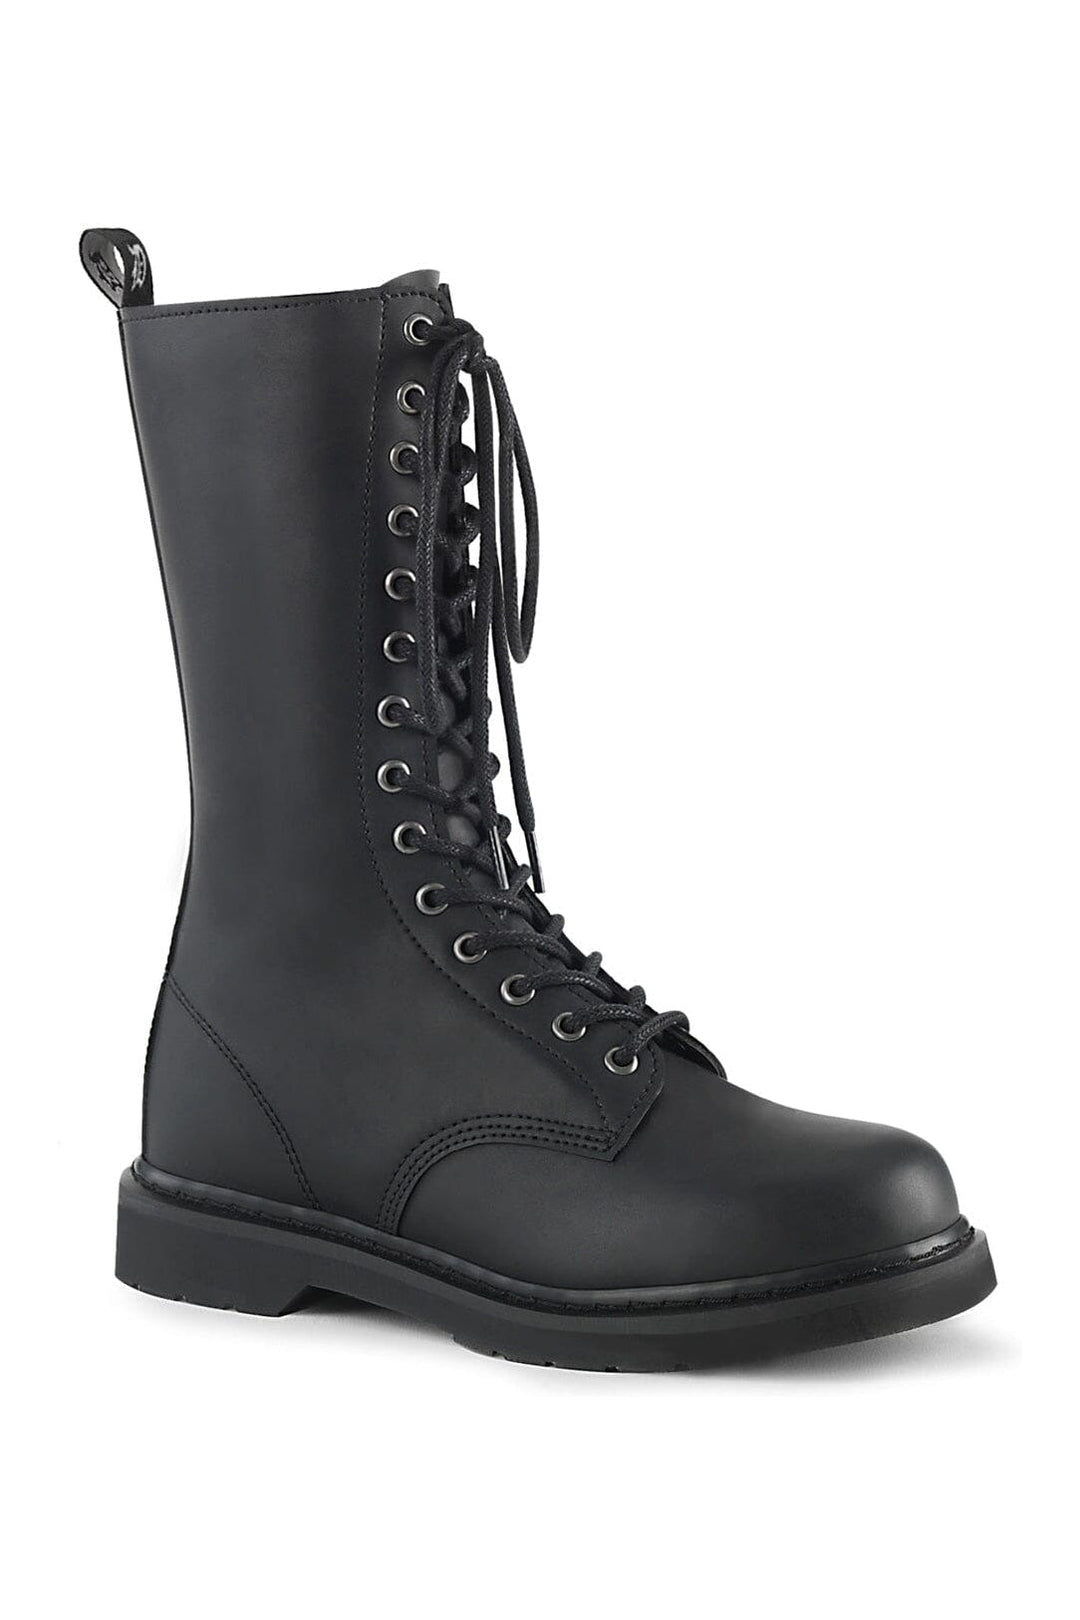 BOLT-300 Black Vegan Leather Knee Boot-Knee Boots-Demonia-Black-10-Vegan Leather-SEXYSHOES.COM